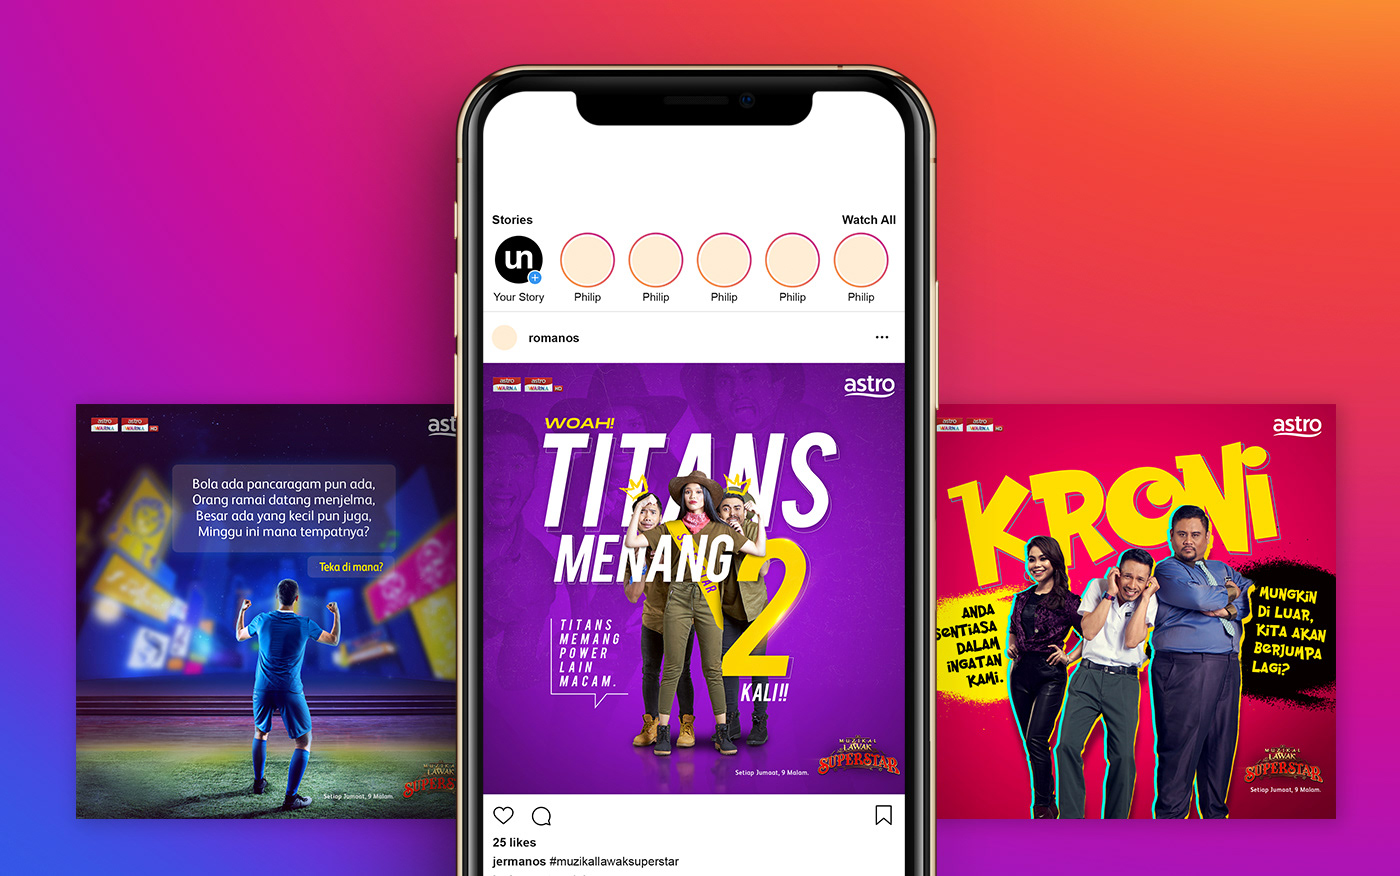 muzikal lawak superstar Astro comdey lawak warna social media graphic broadway Musical malaysia